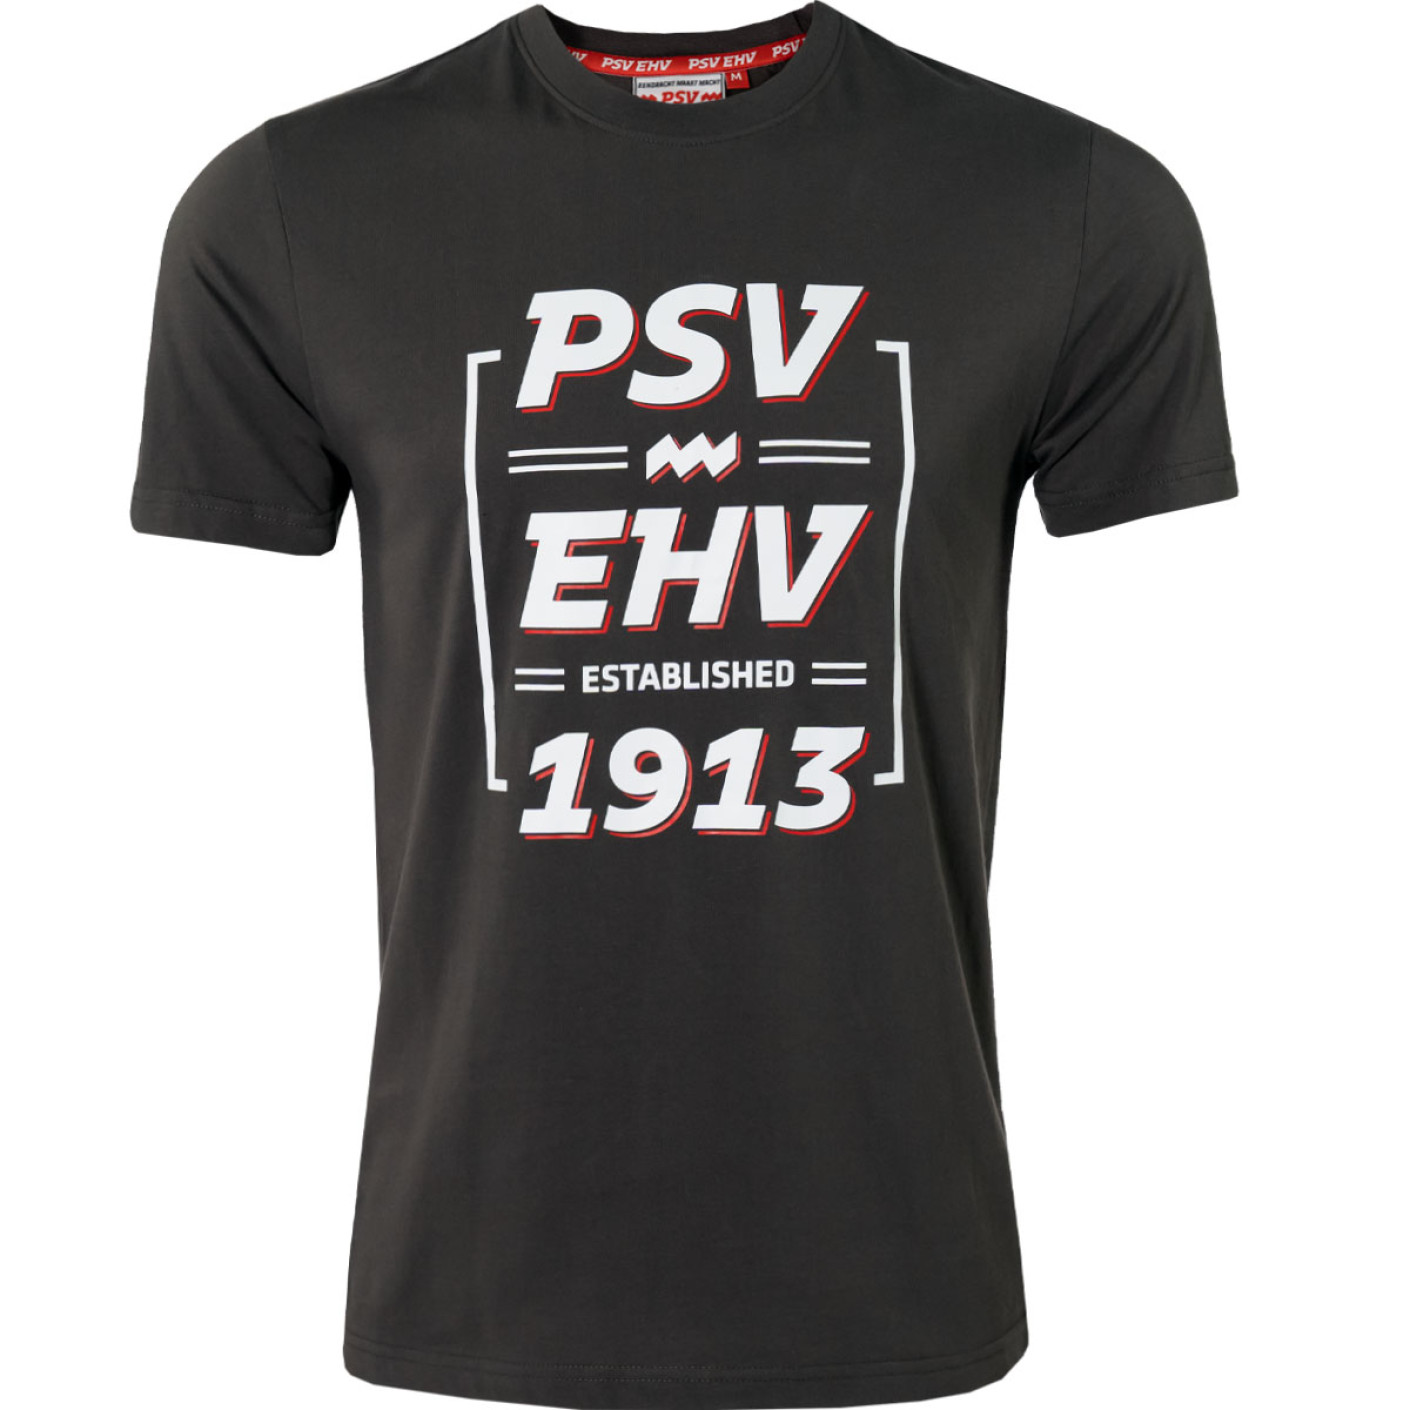 PSV T-shirt EHV 1913 Grijs